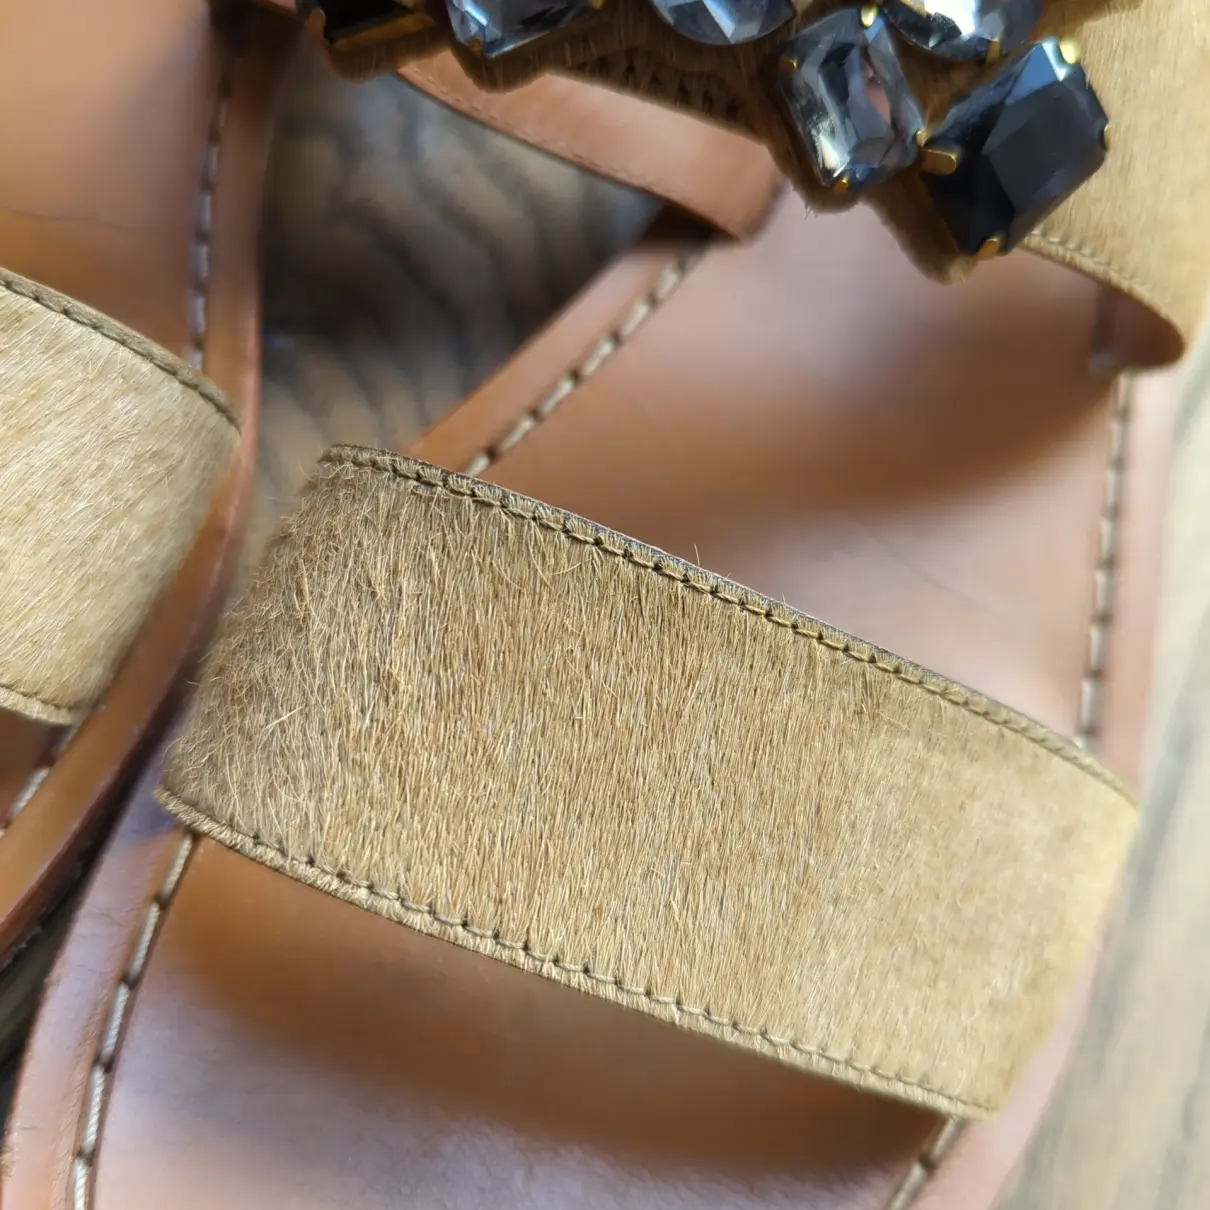 Luxury Marni Sandals Women